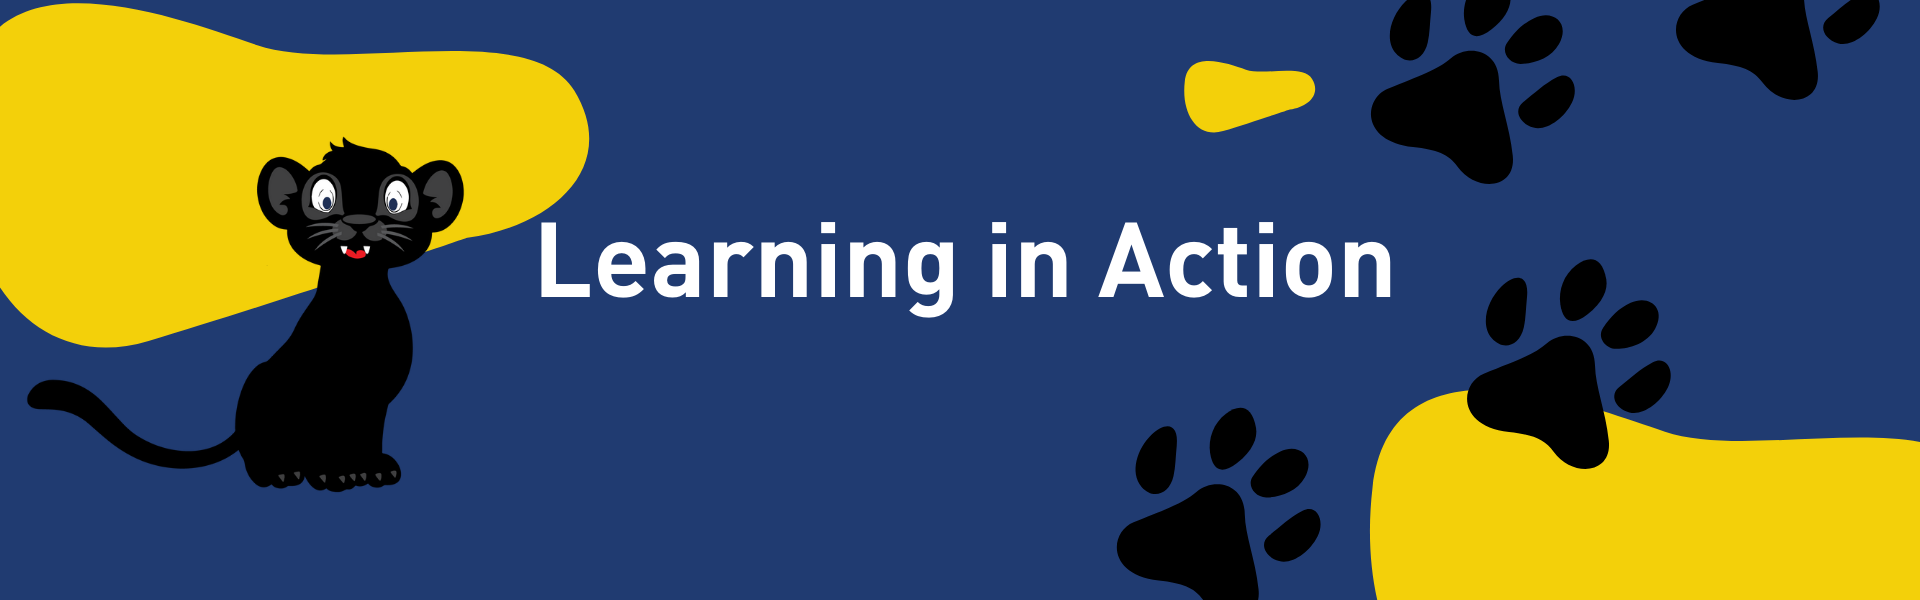 ISKL Learning in Action banner